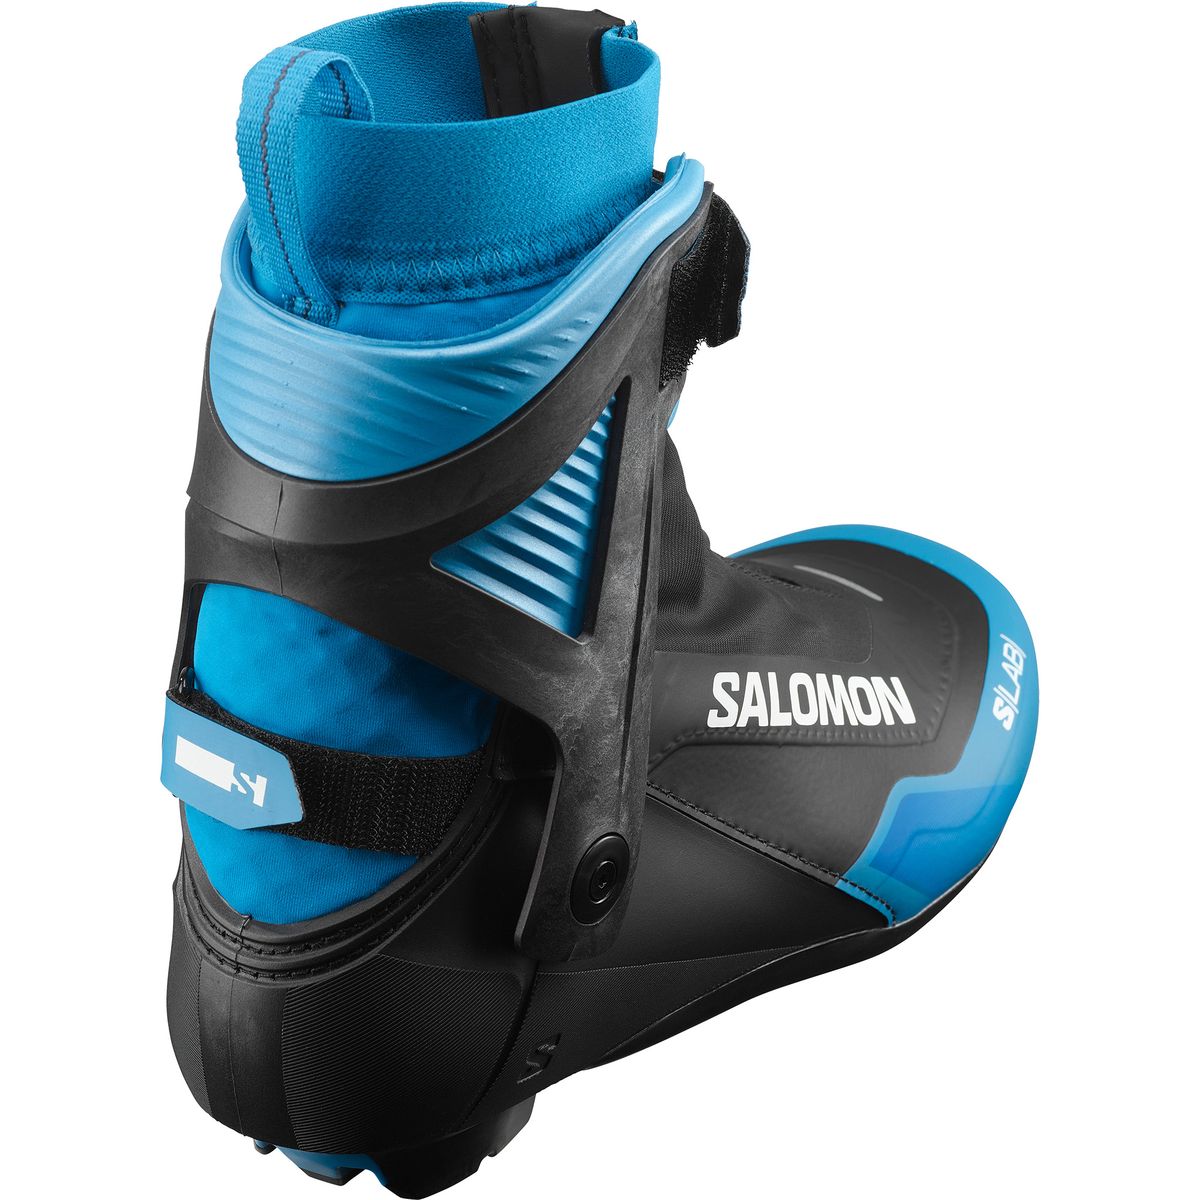 Salomon S/Lab Skiathlon CS Junior Prolink Kinder Langlaufschuhe